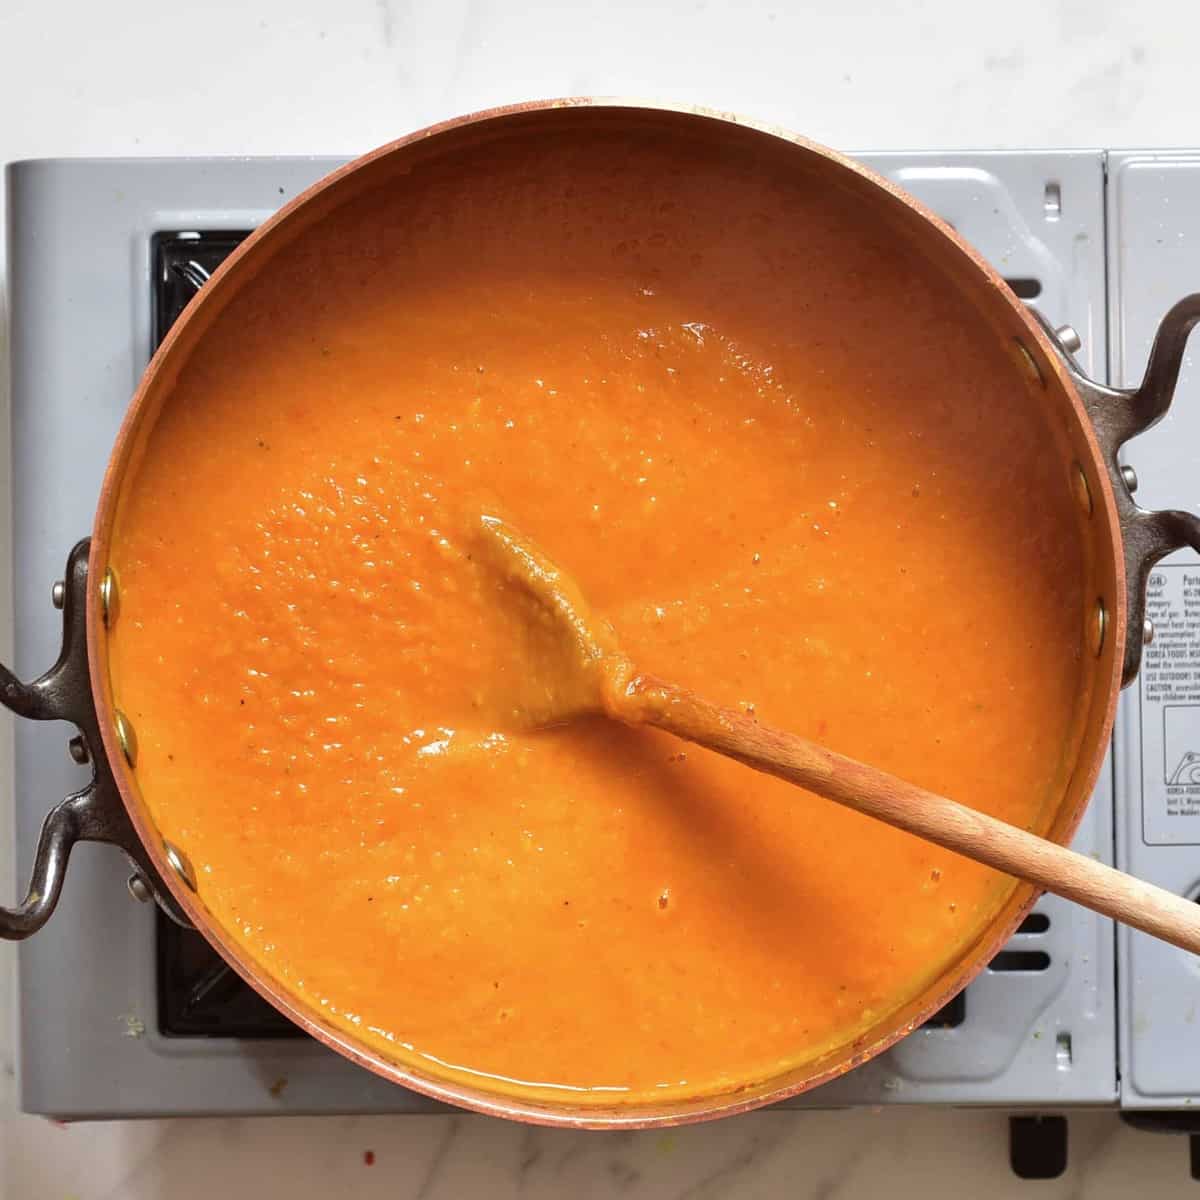 Making pumpkin soup in a pot